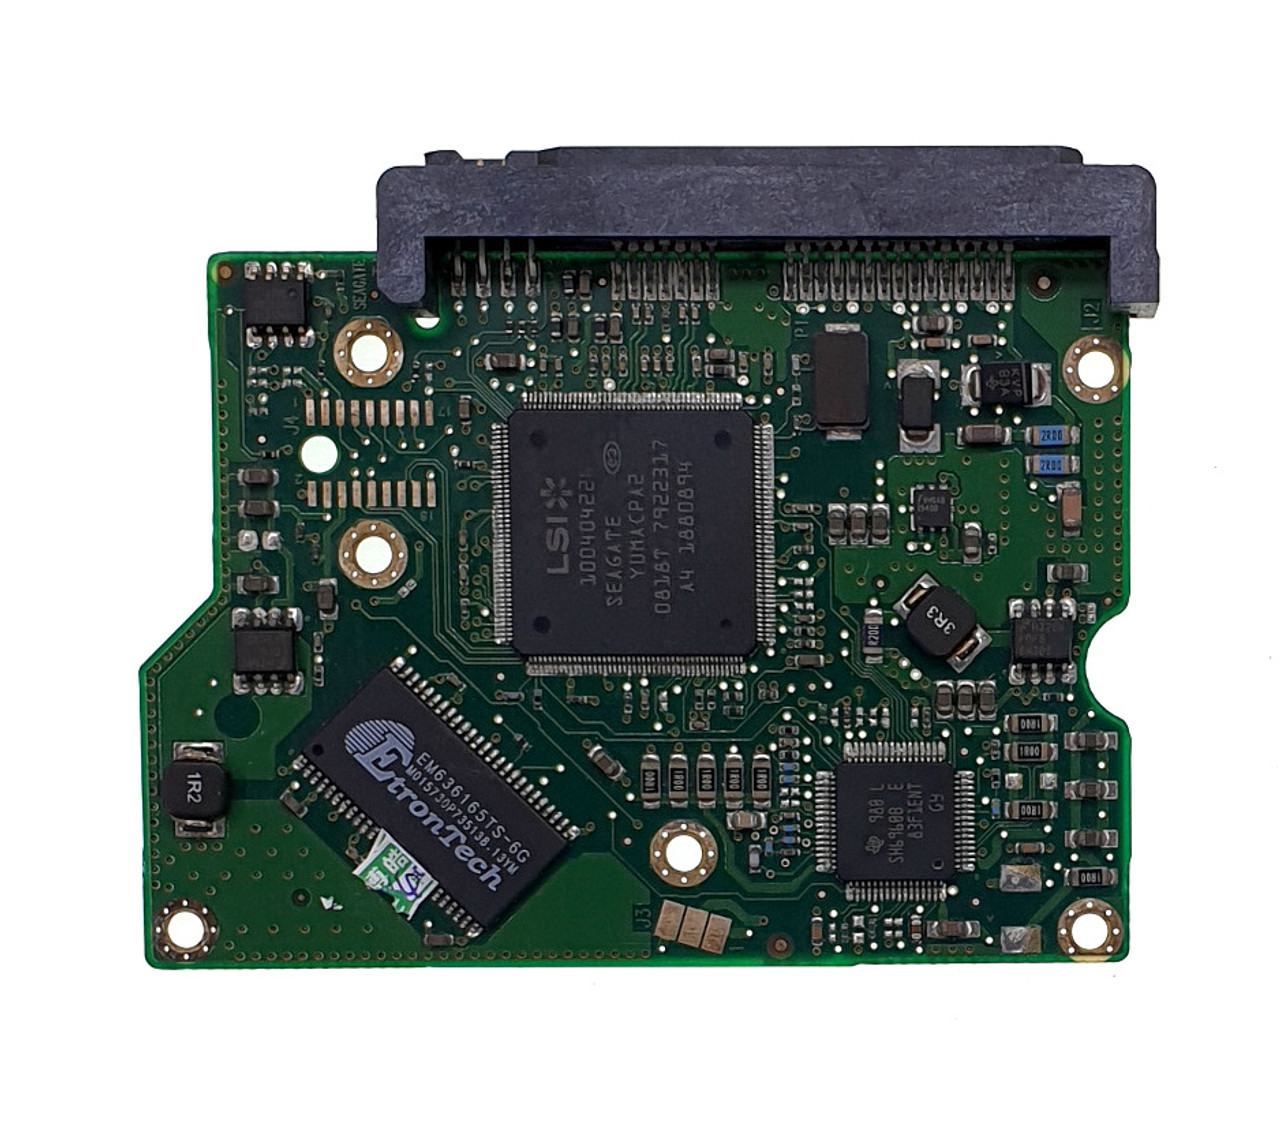 Seagate 3.5" SATA Hard Drive Maxtor STM380215AS Seagate ST380815AS  ST380215AS 80GB HDD PCB Board Circuit Control Logic Board 100422559